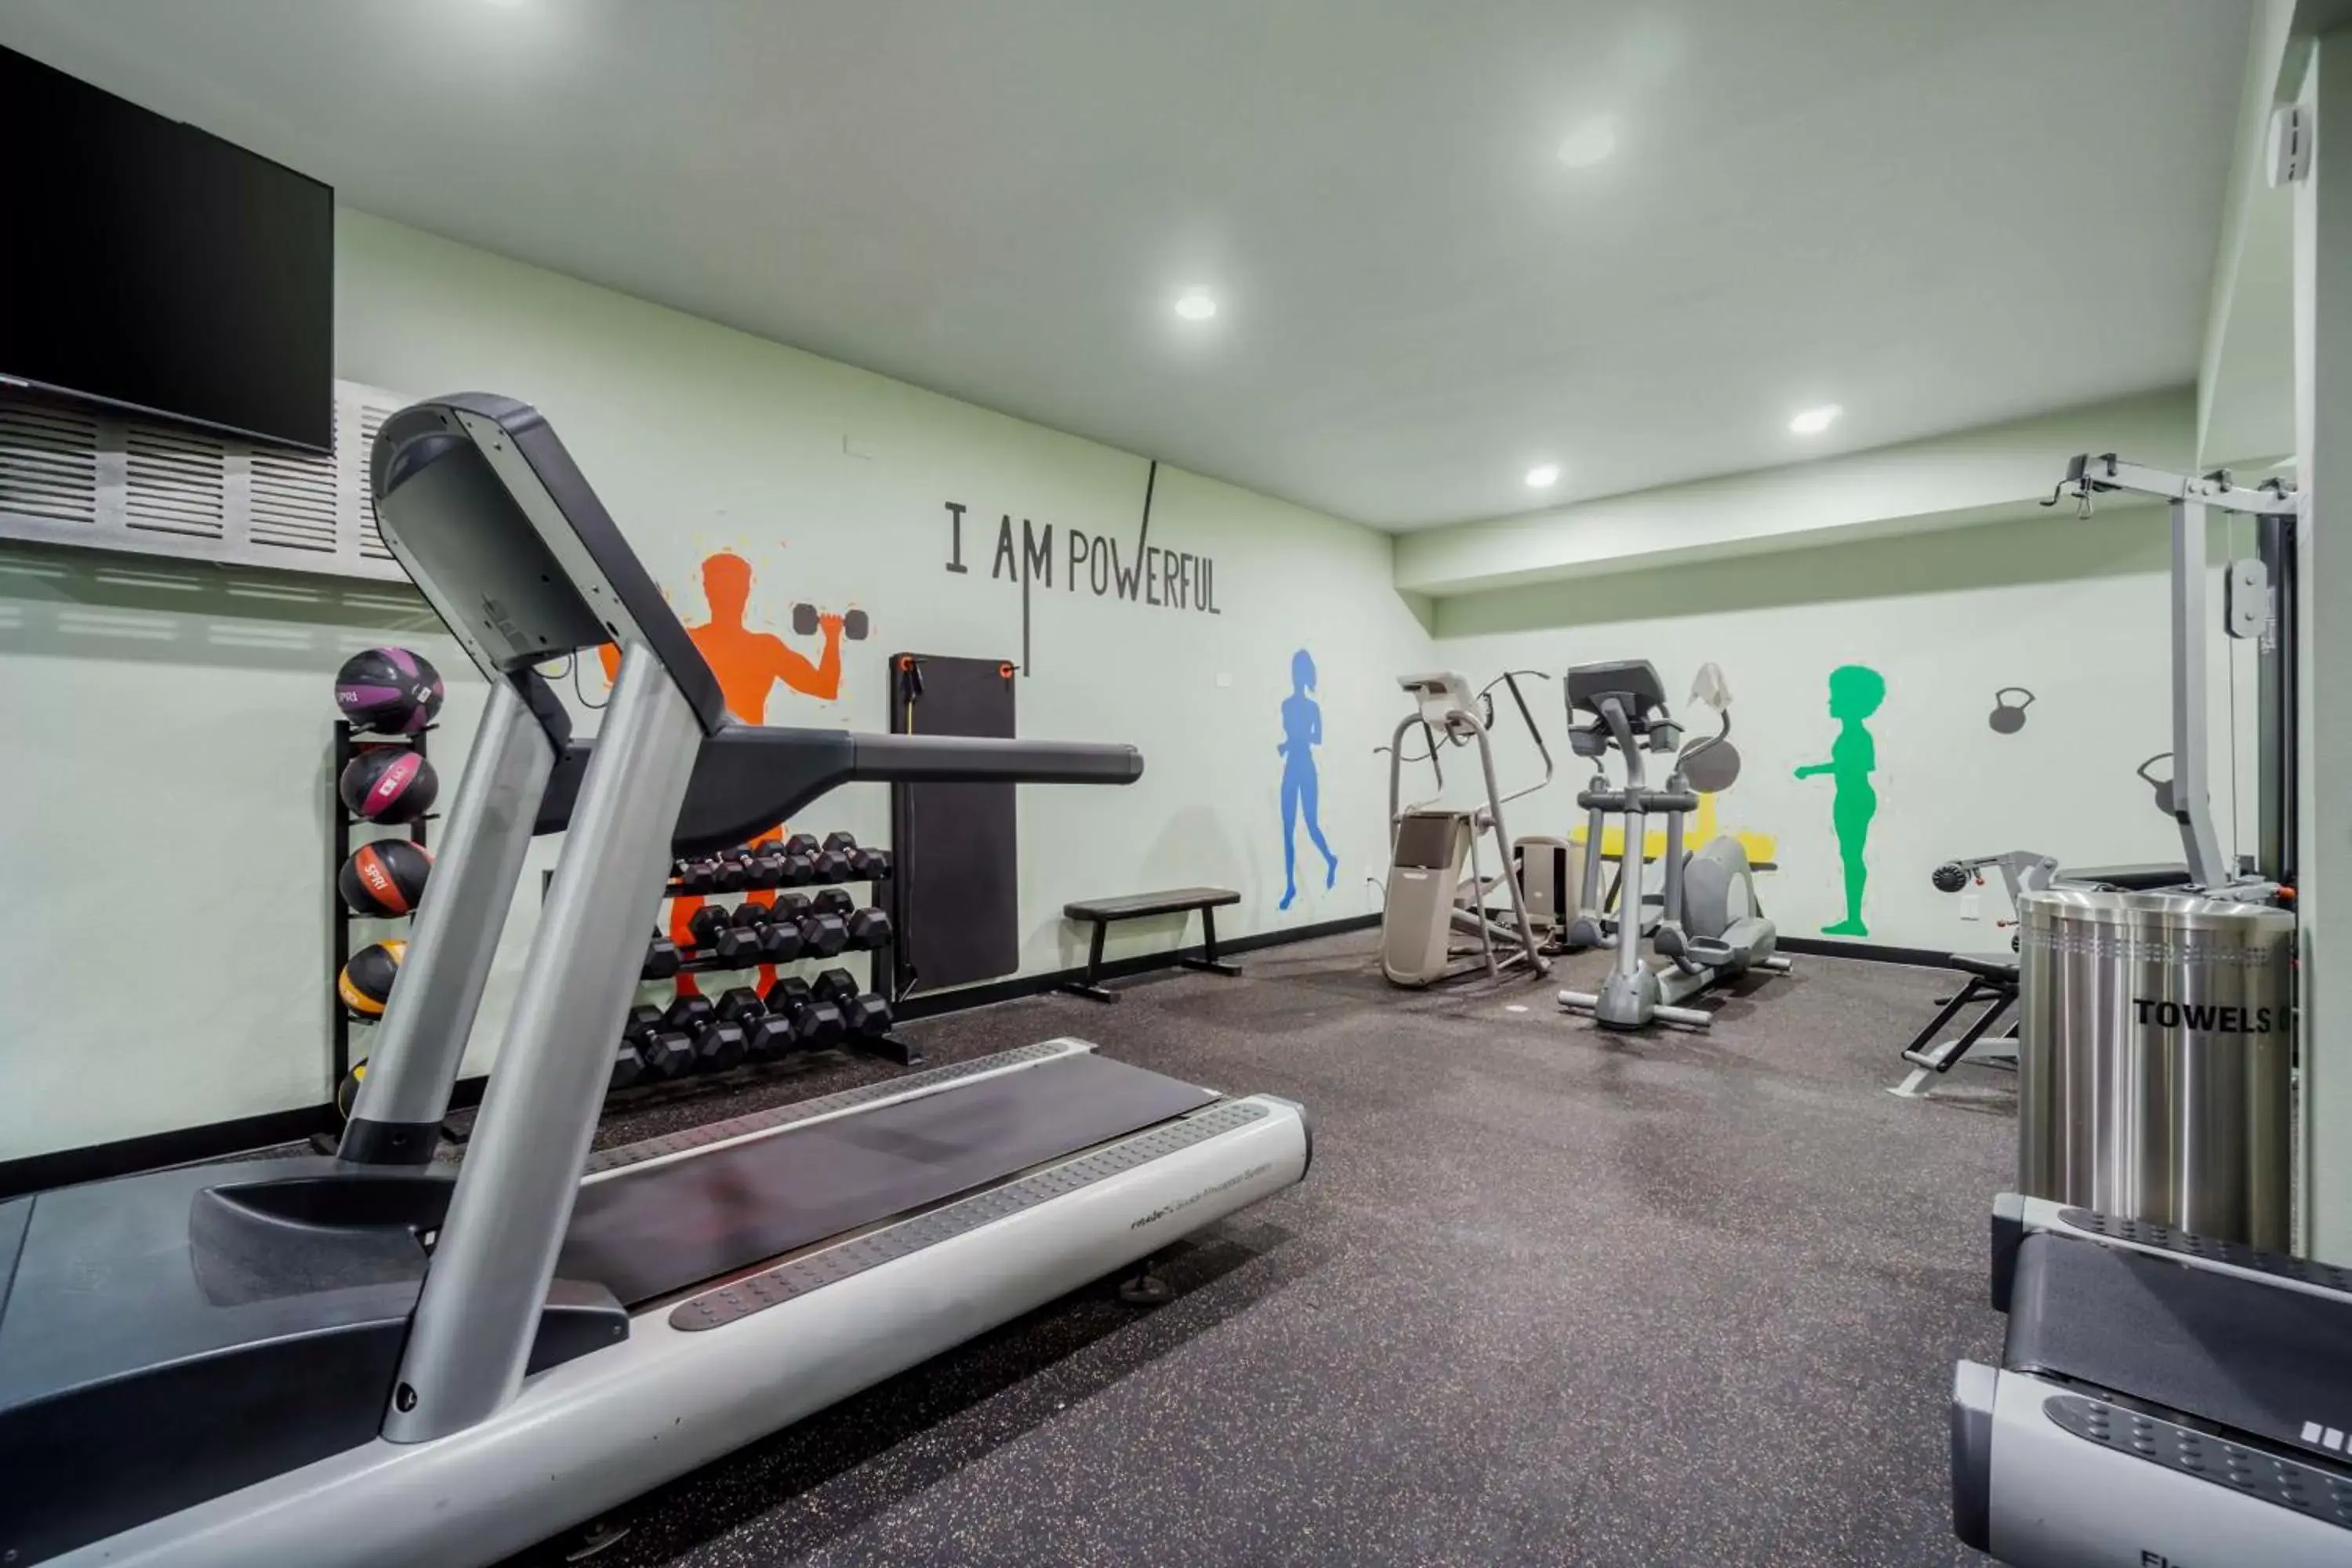 Fitness centre/facilities, Fitness Center/Facilities in Best Western Plus Renton Inn